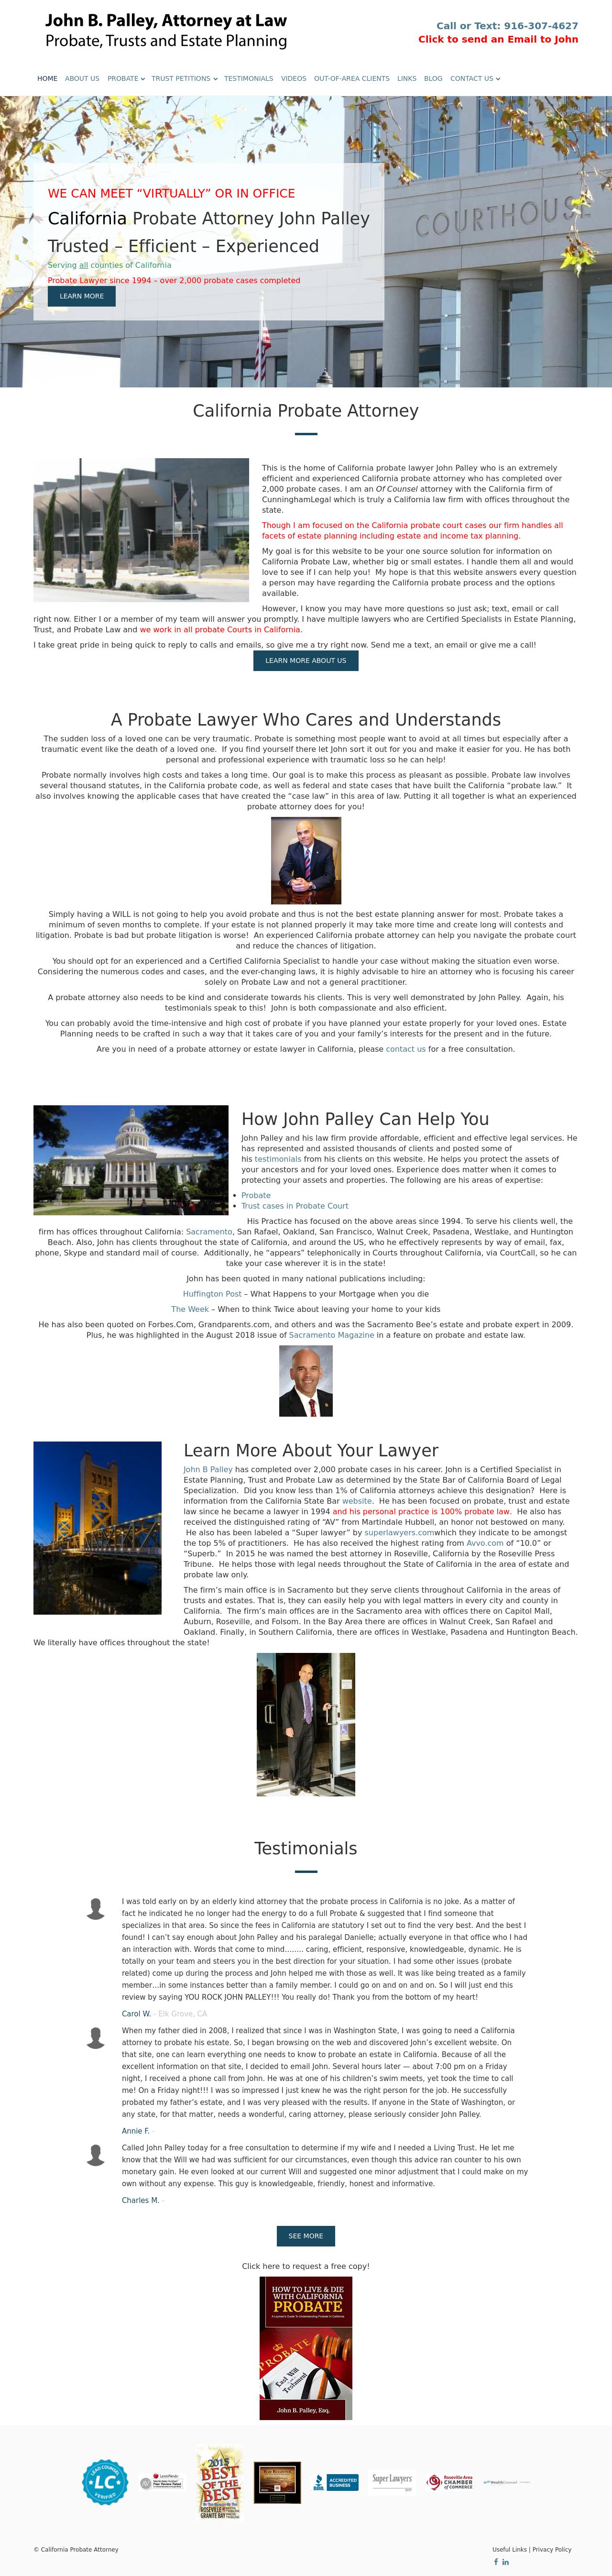 John B. Palley - Meissner, Joseph & Palley - Sacramento CA Lawyers